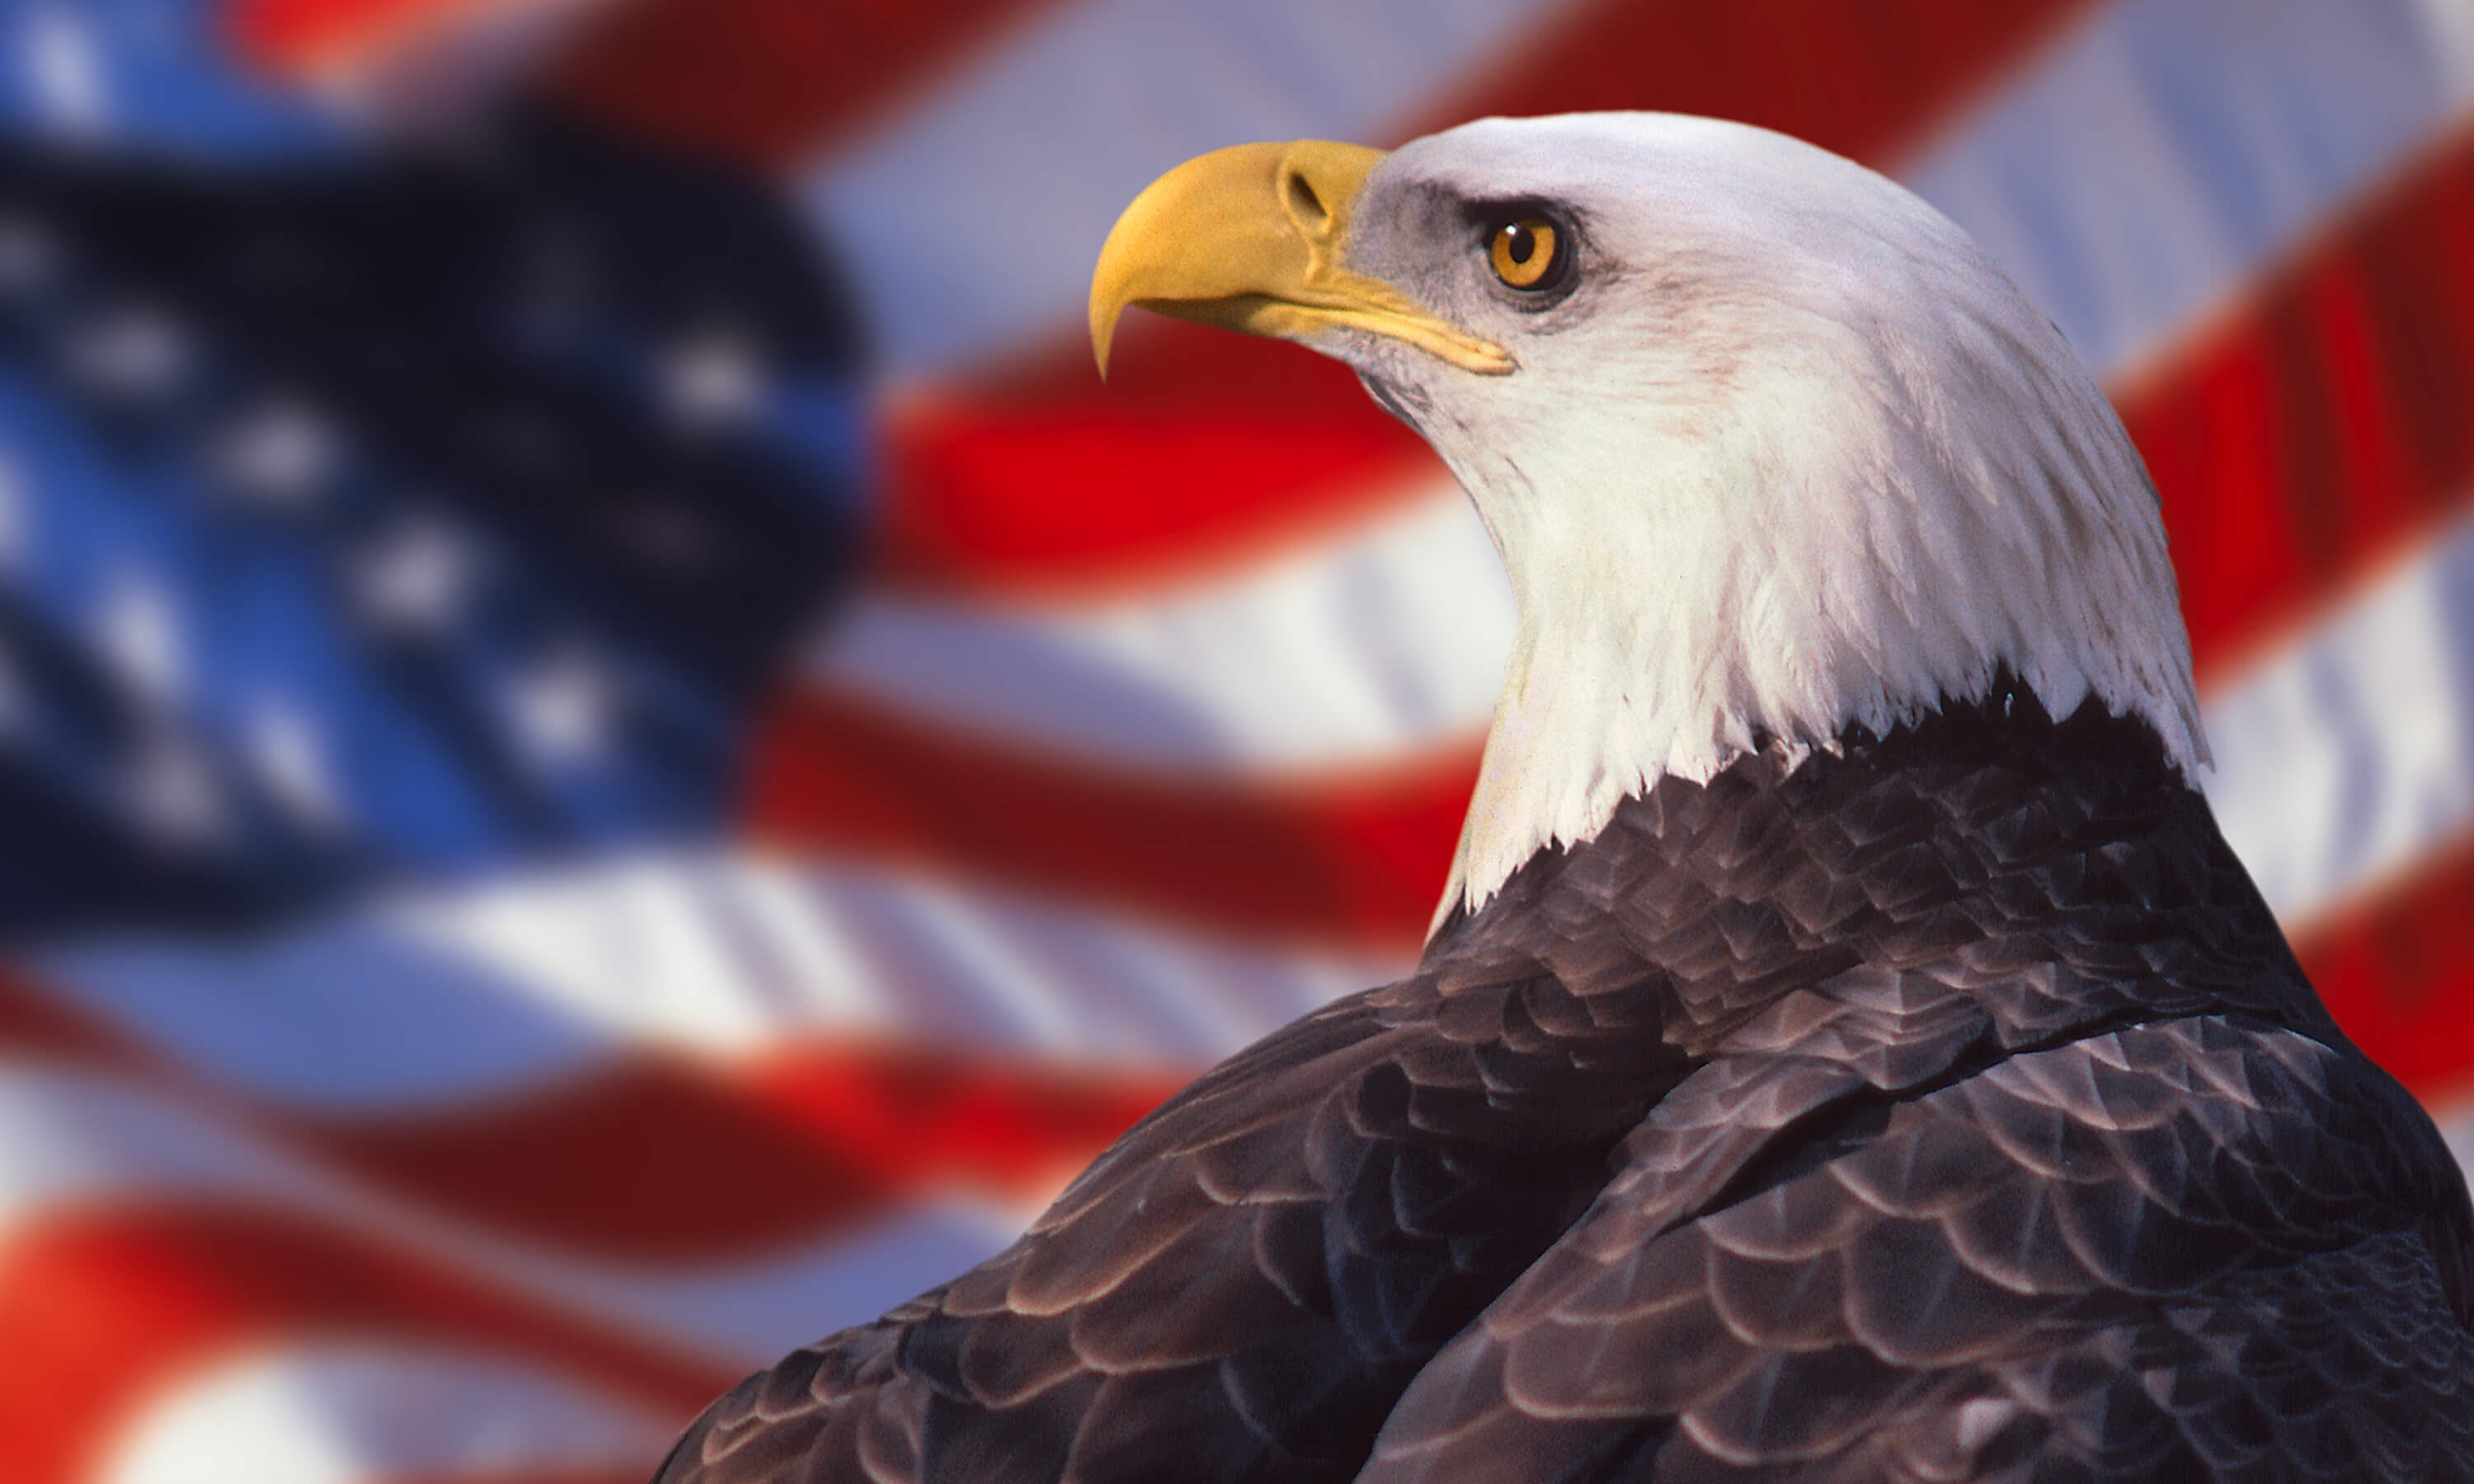 Bald eagle and American flag